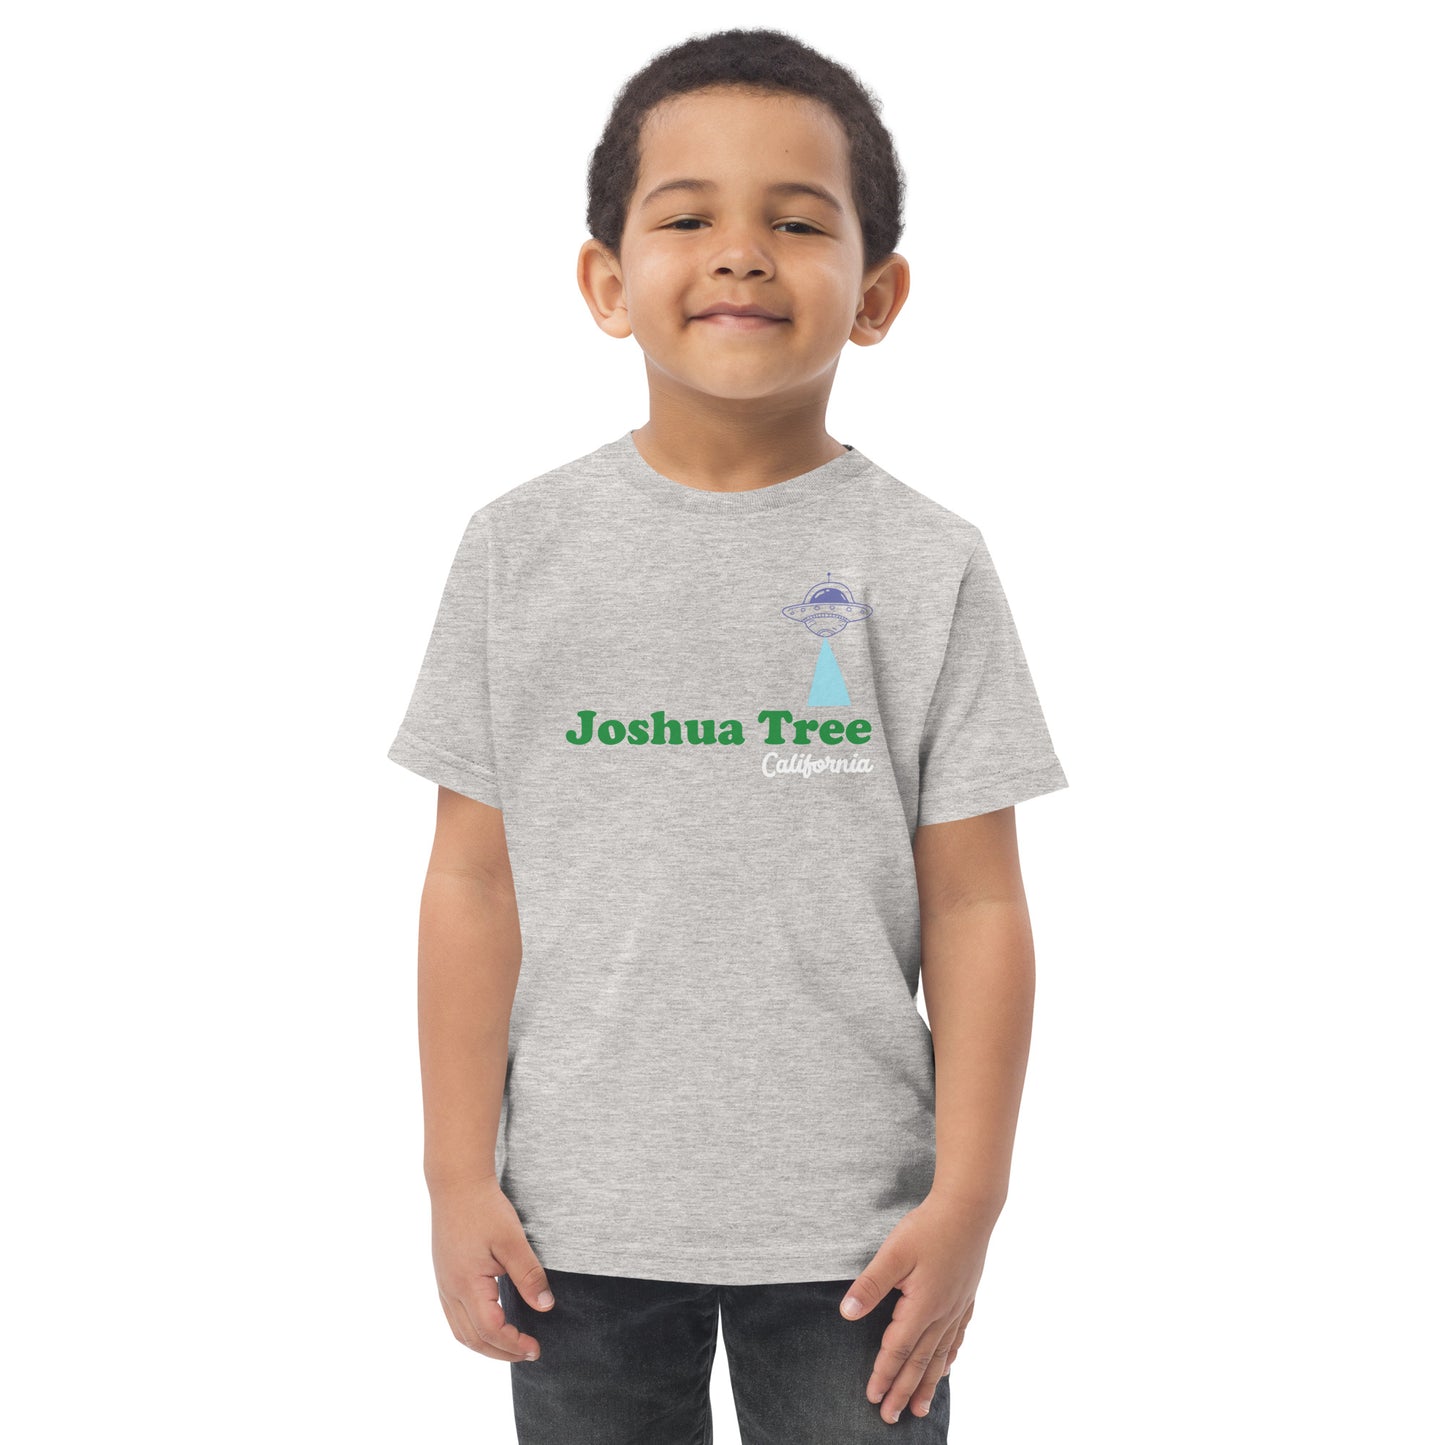 Joshua Tree Toddler Tee